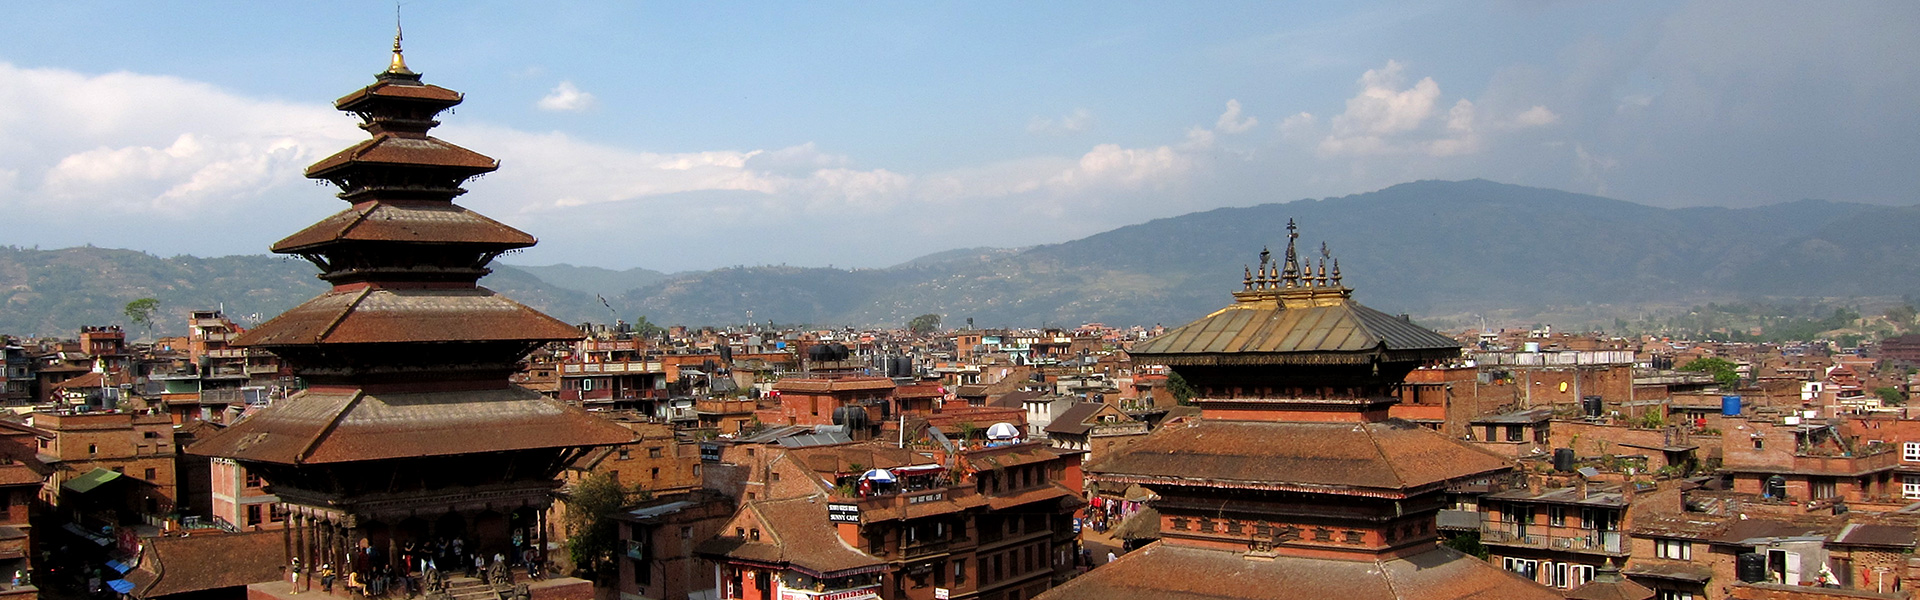 nepal-kathmandu-temple-city